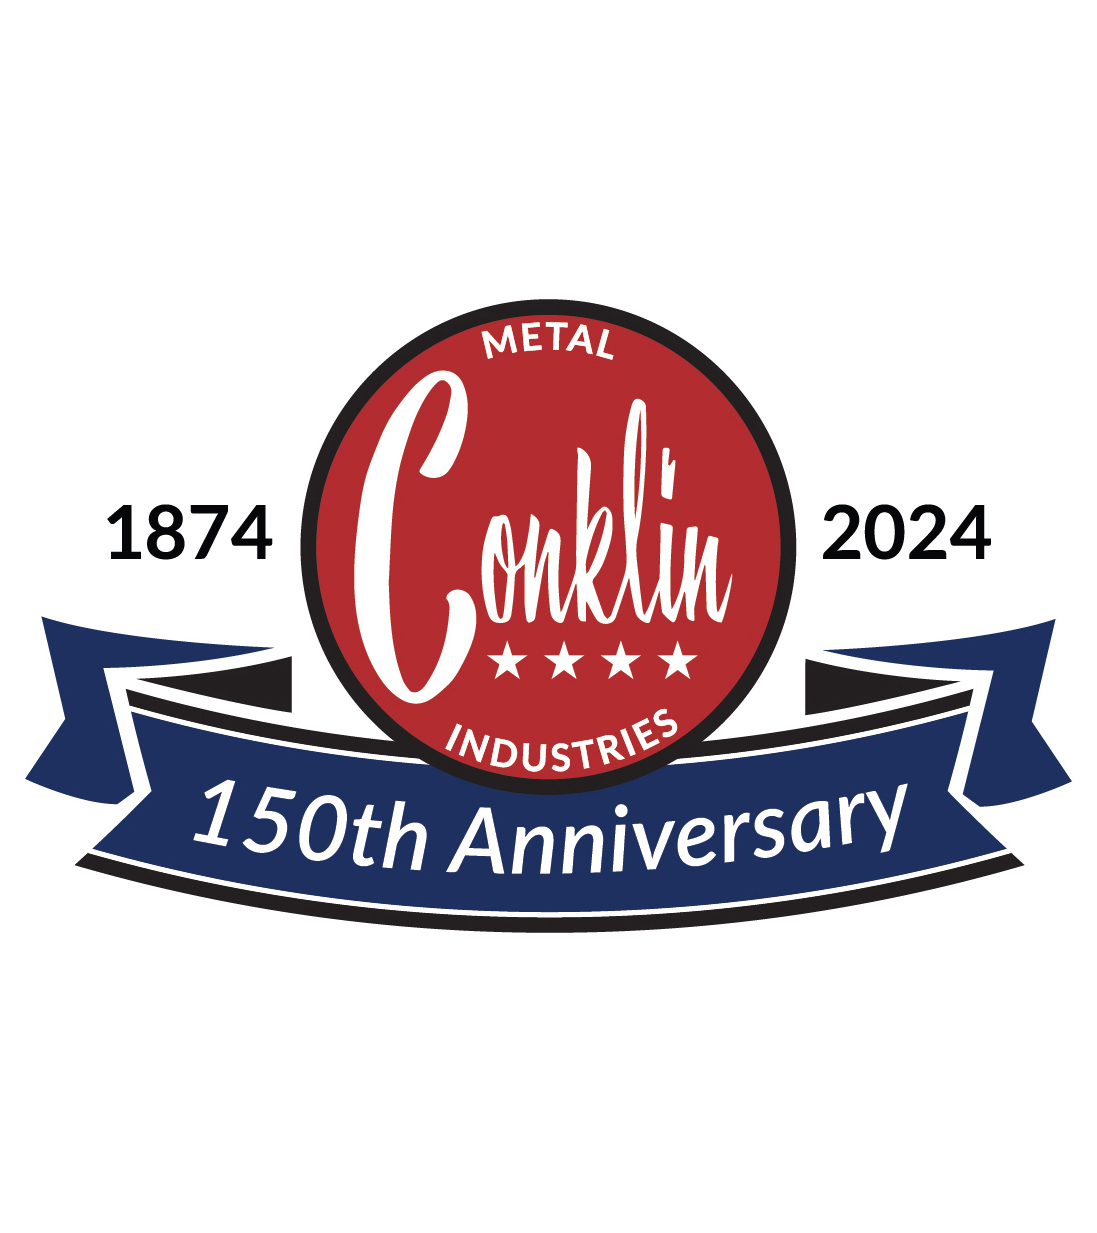 Conklin Metal Industries logo